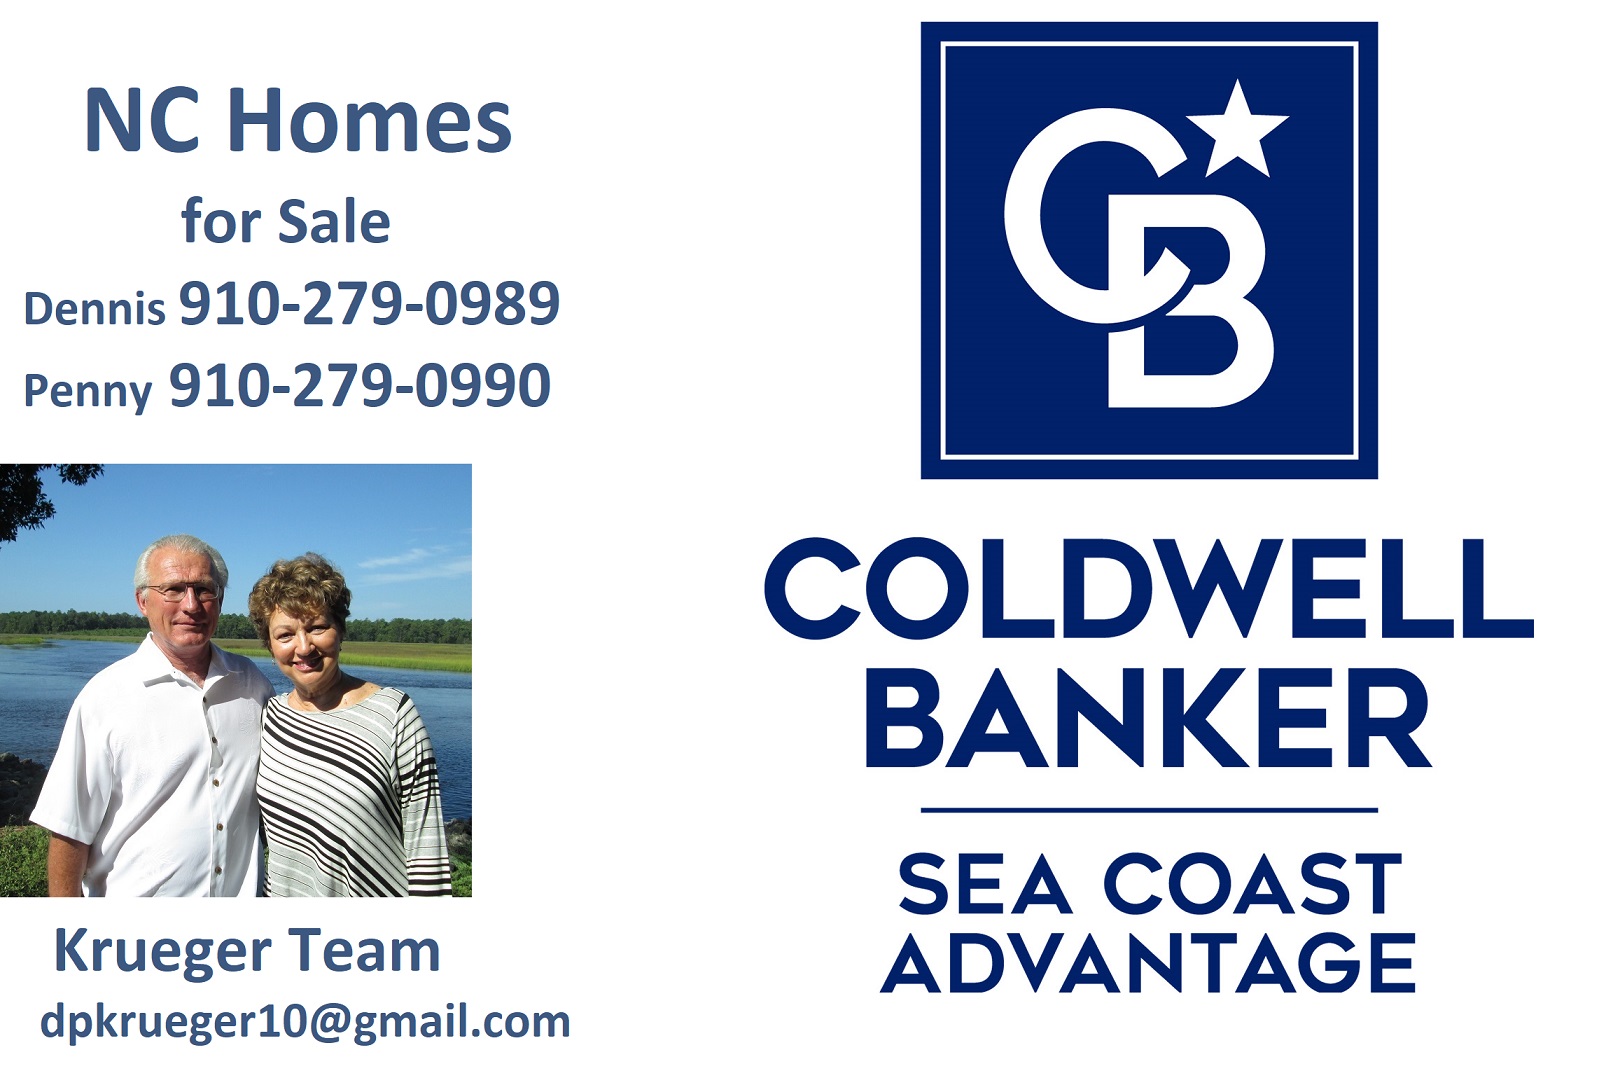 Krueger Team Coldwell Banker Sea Coast Advantage NC Homes